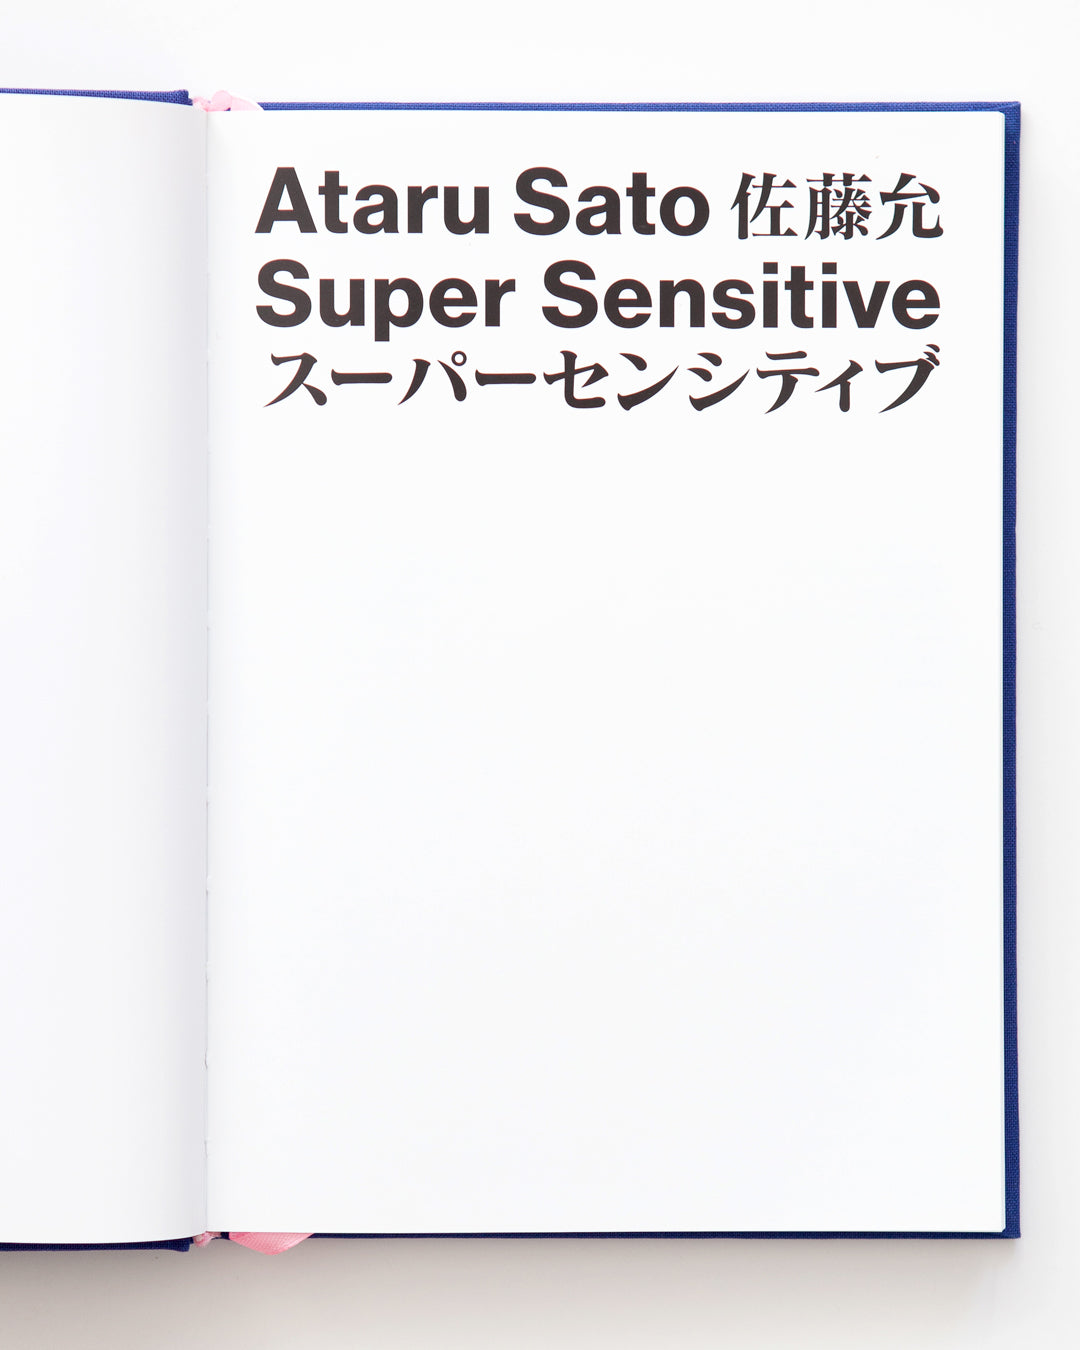 Ataru Sato - Super Sensitive